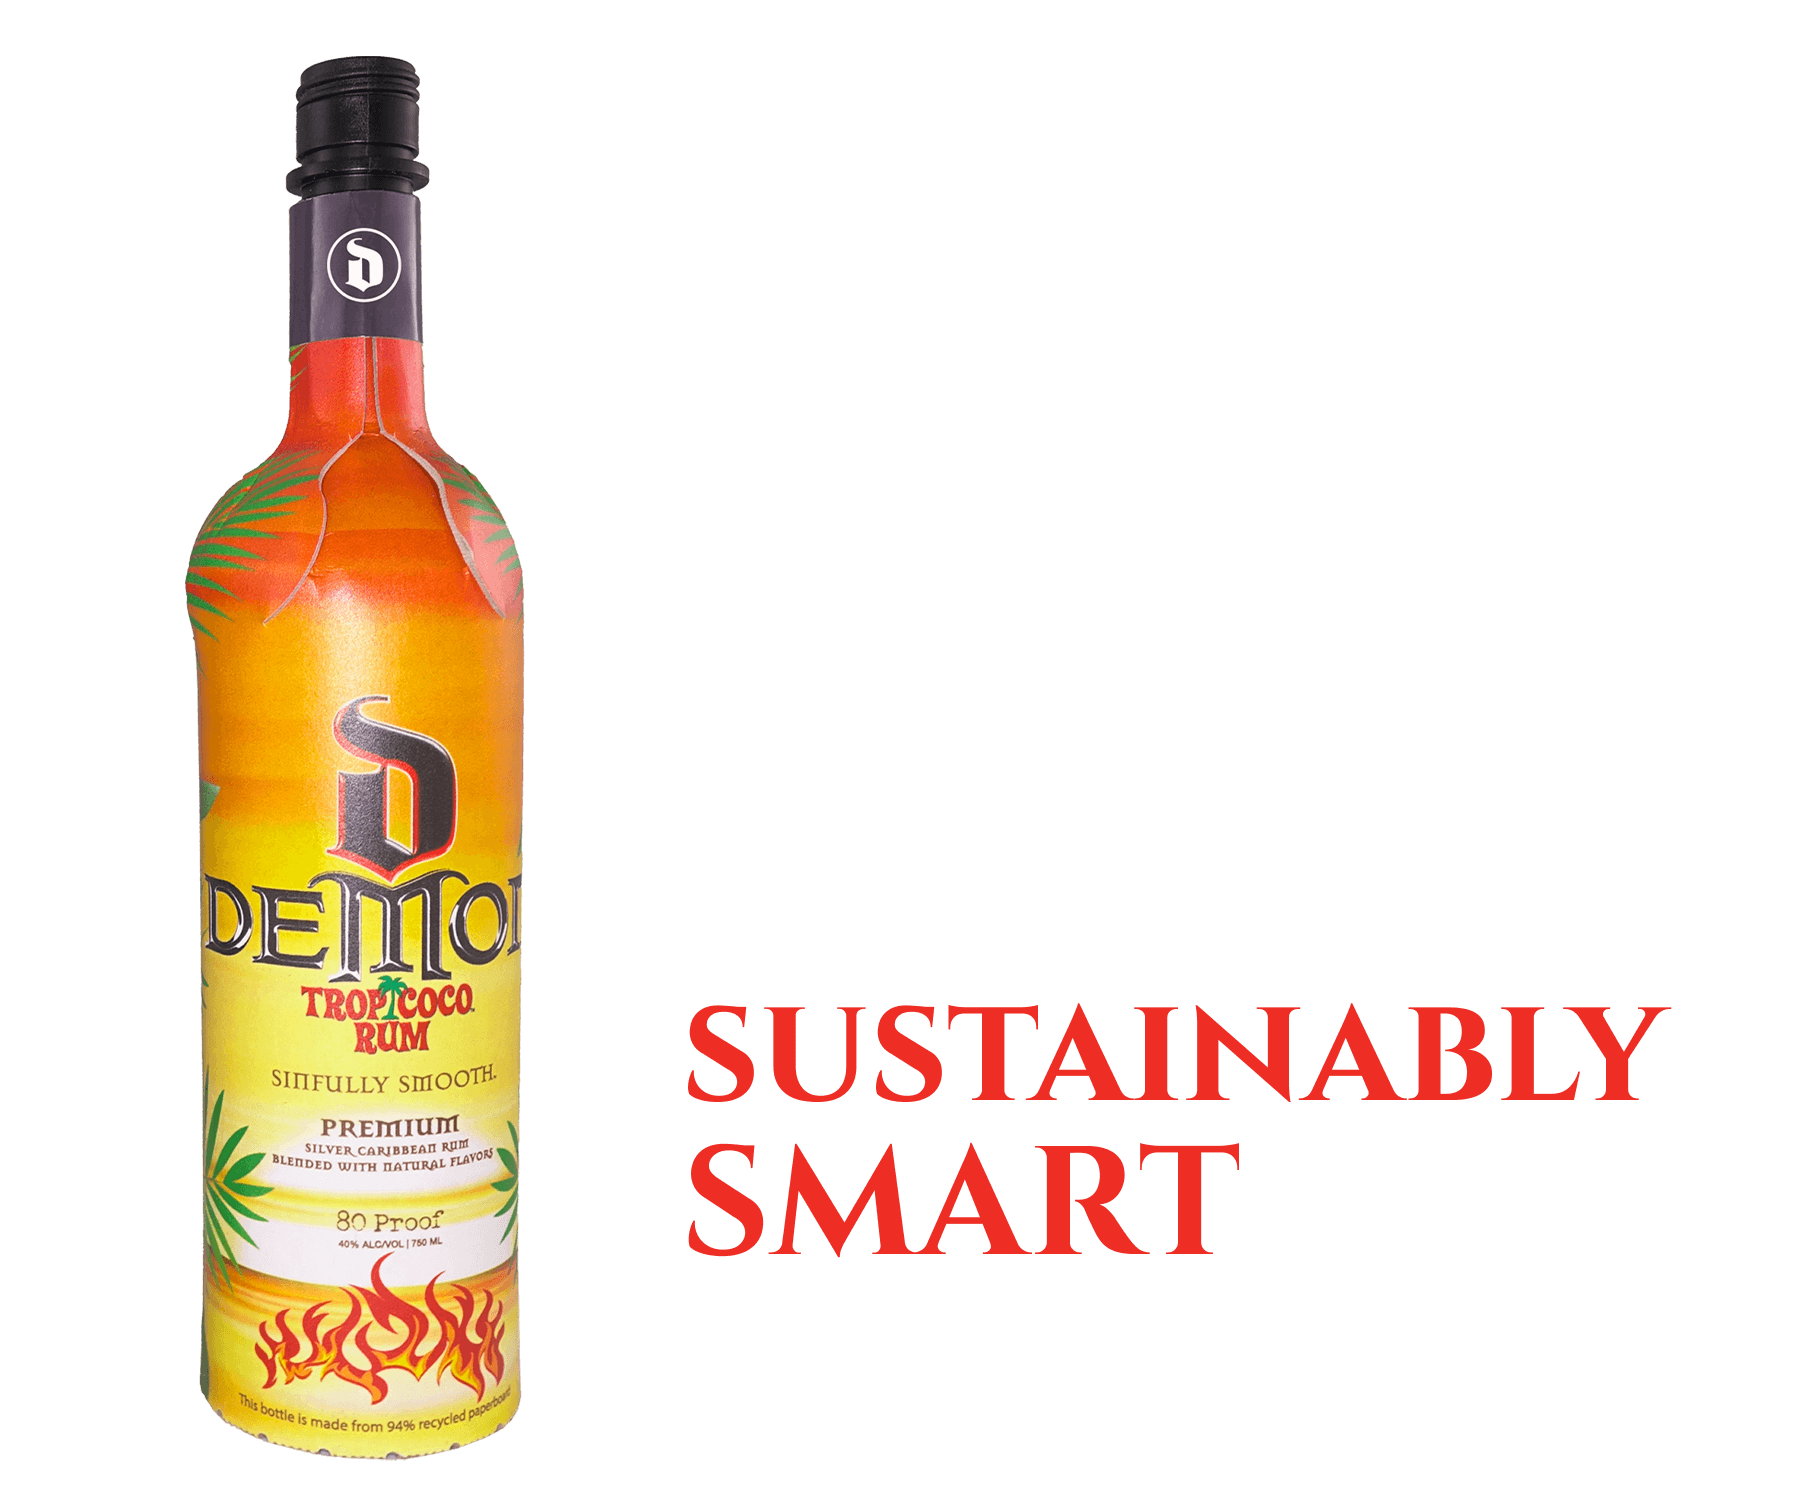 demon-rum-tropicoco-eco-bottle-tagline